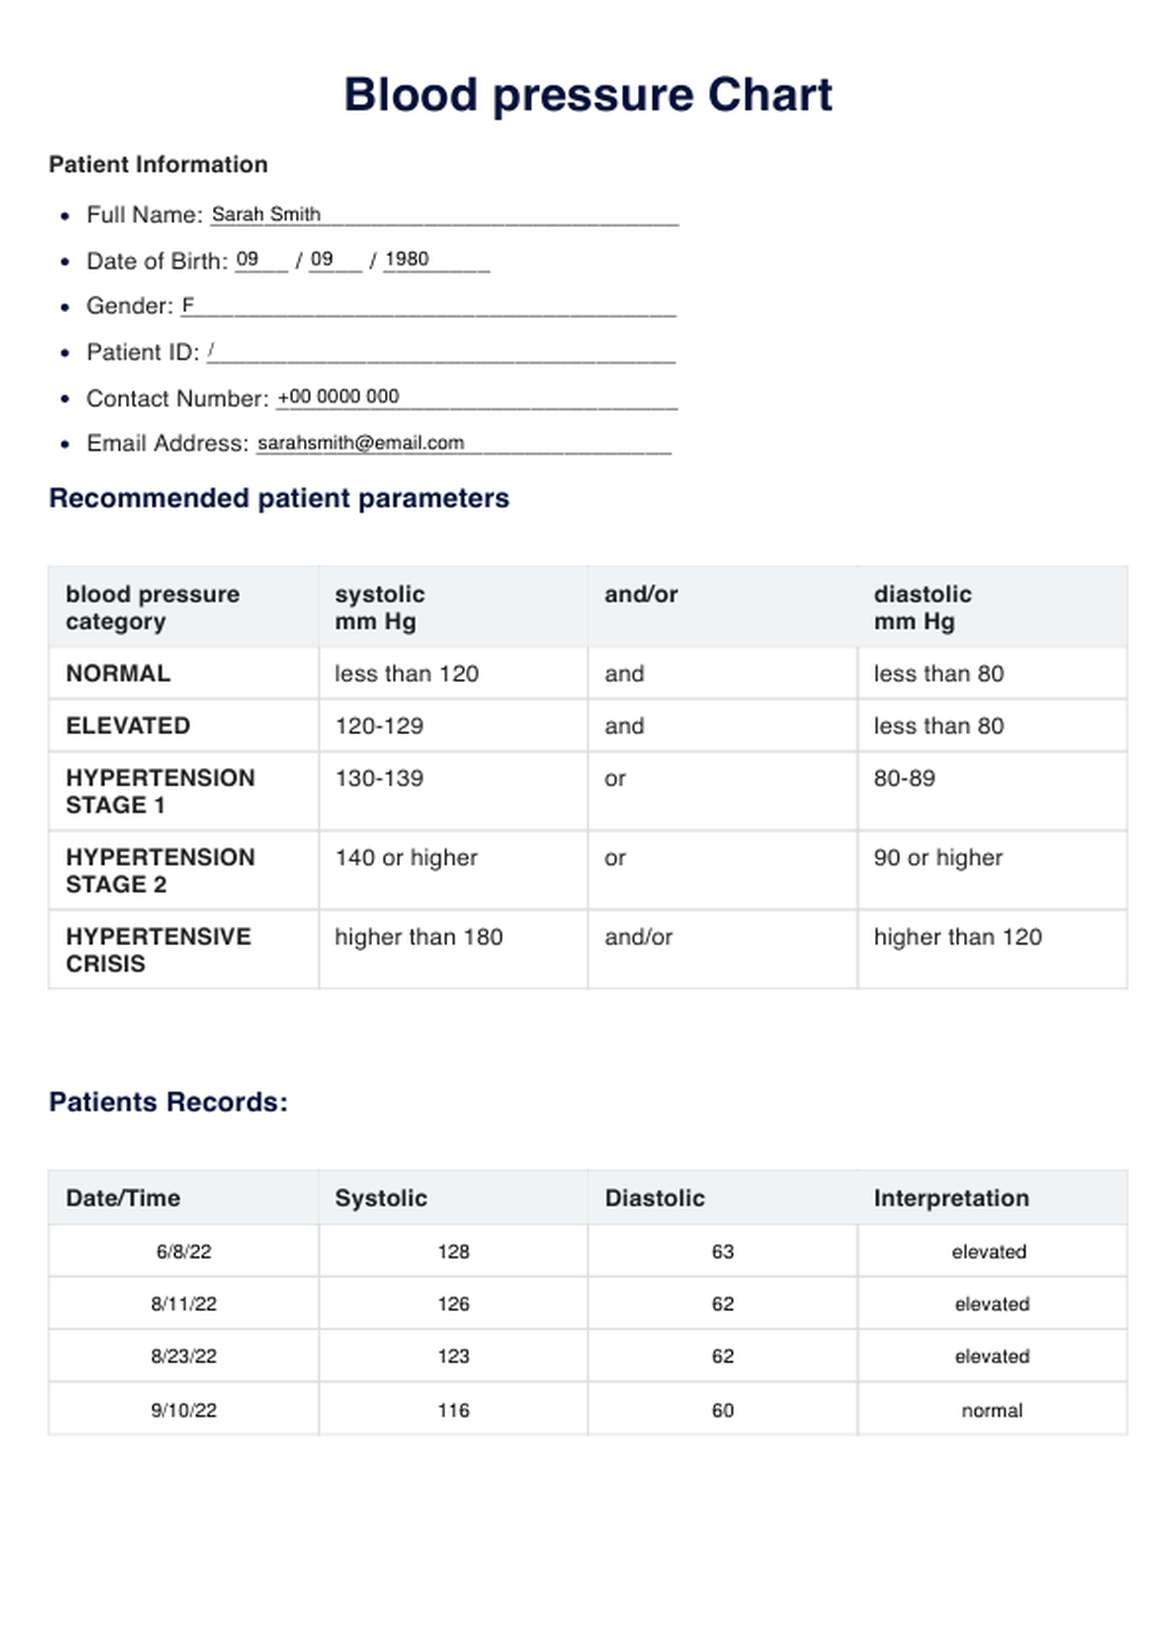 Blood Pressure PDF Example